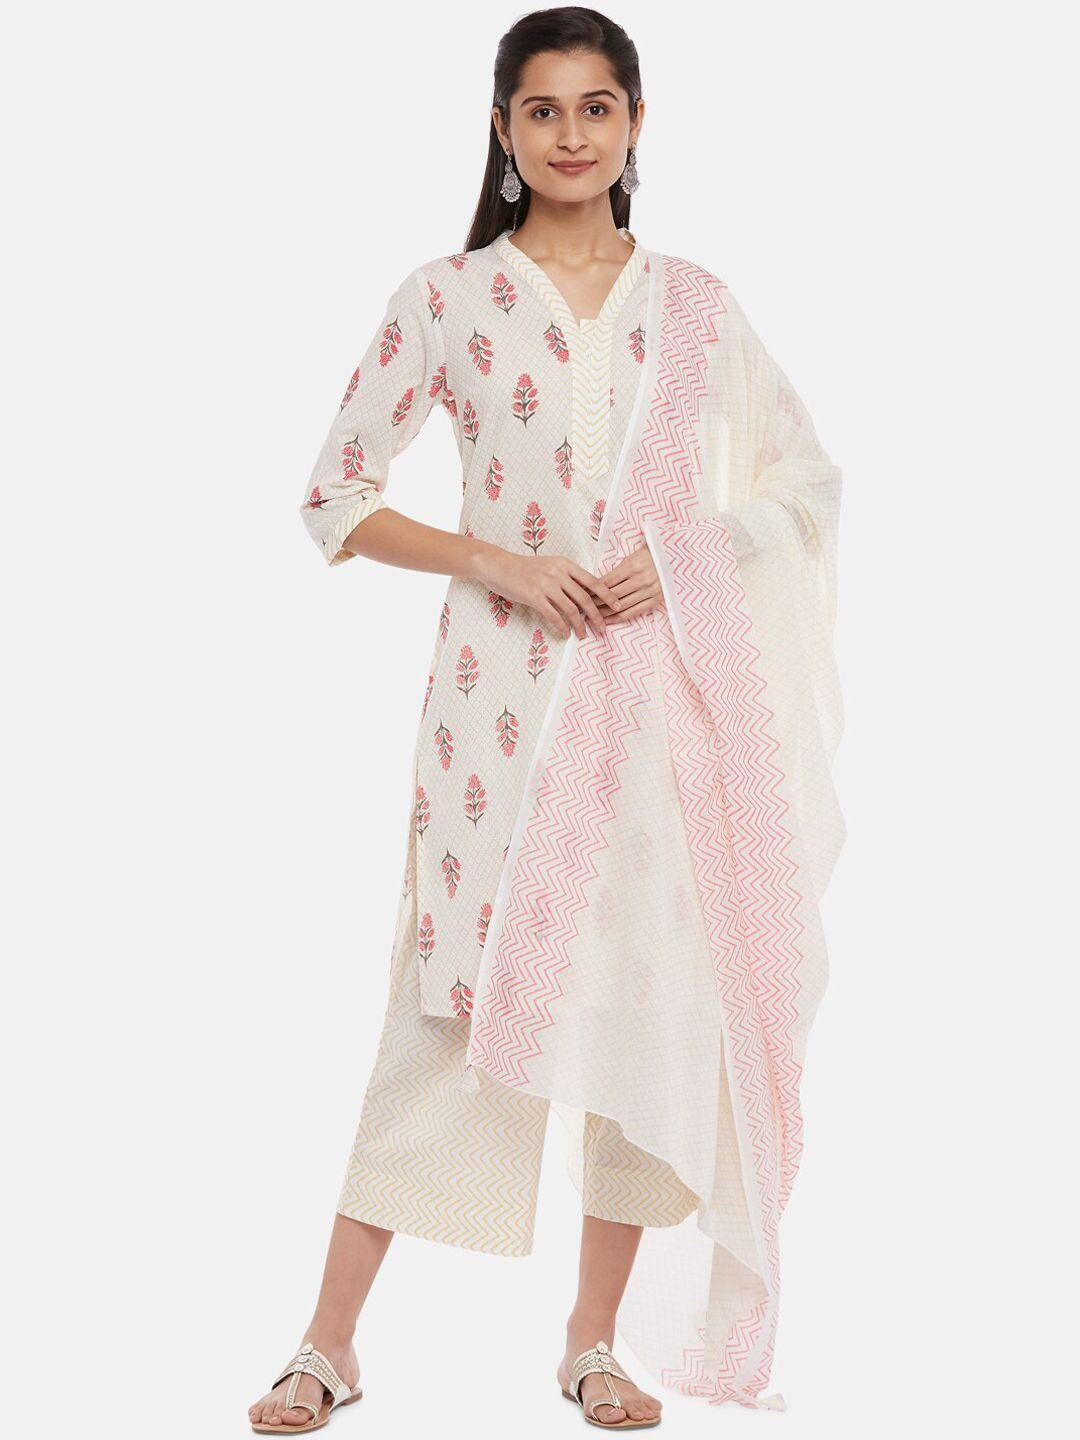 rangmanch-by-pantaloons-women-off-white-ethnic-motifs-printed-kurta-set